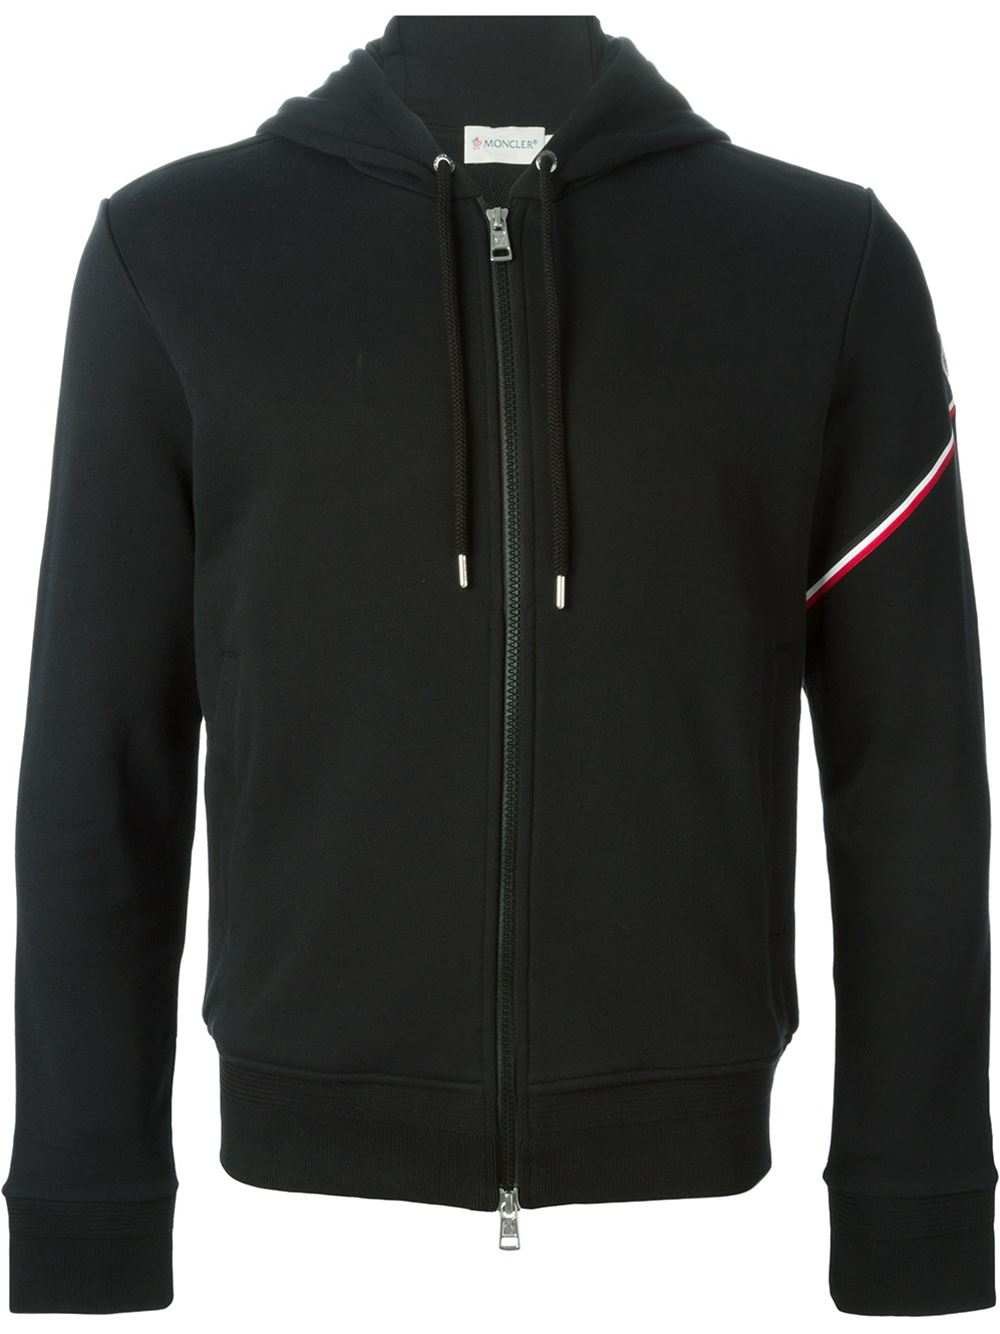 Lyst - Moncler Hooded Sweatshirt in Black for Men